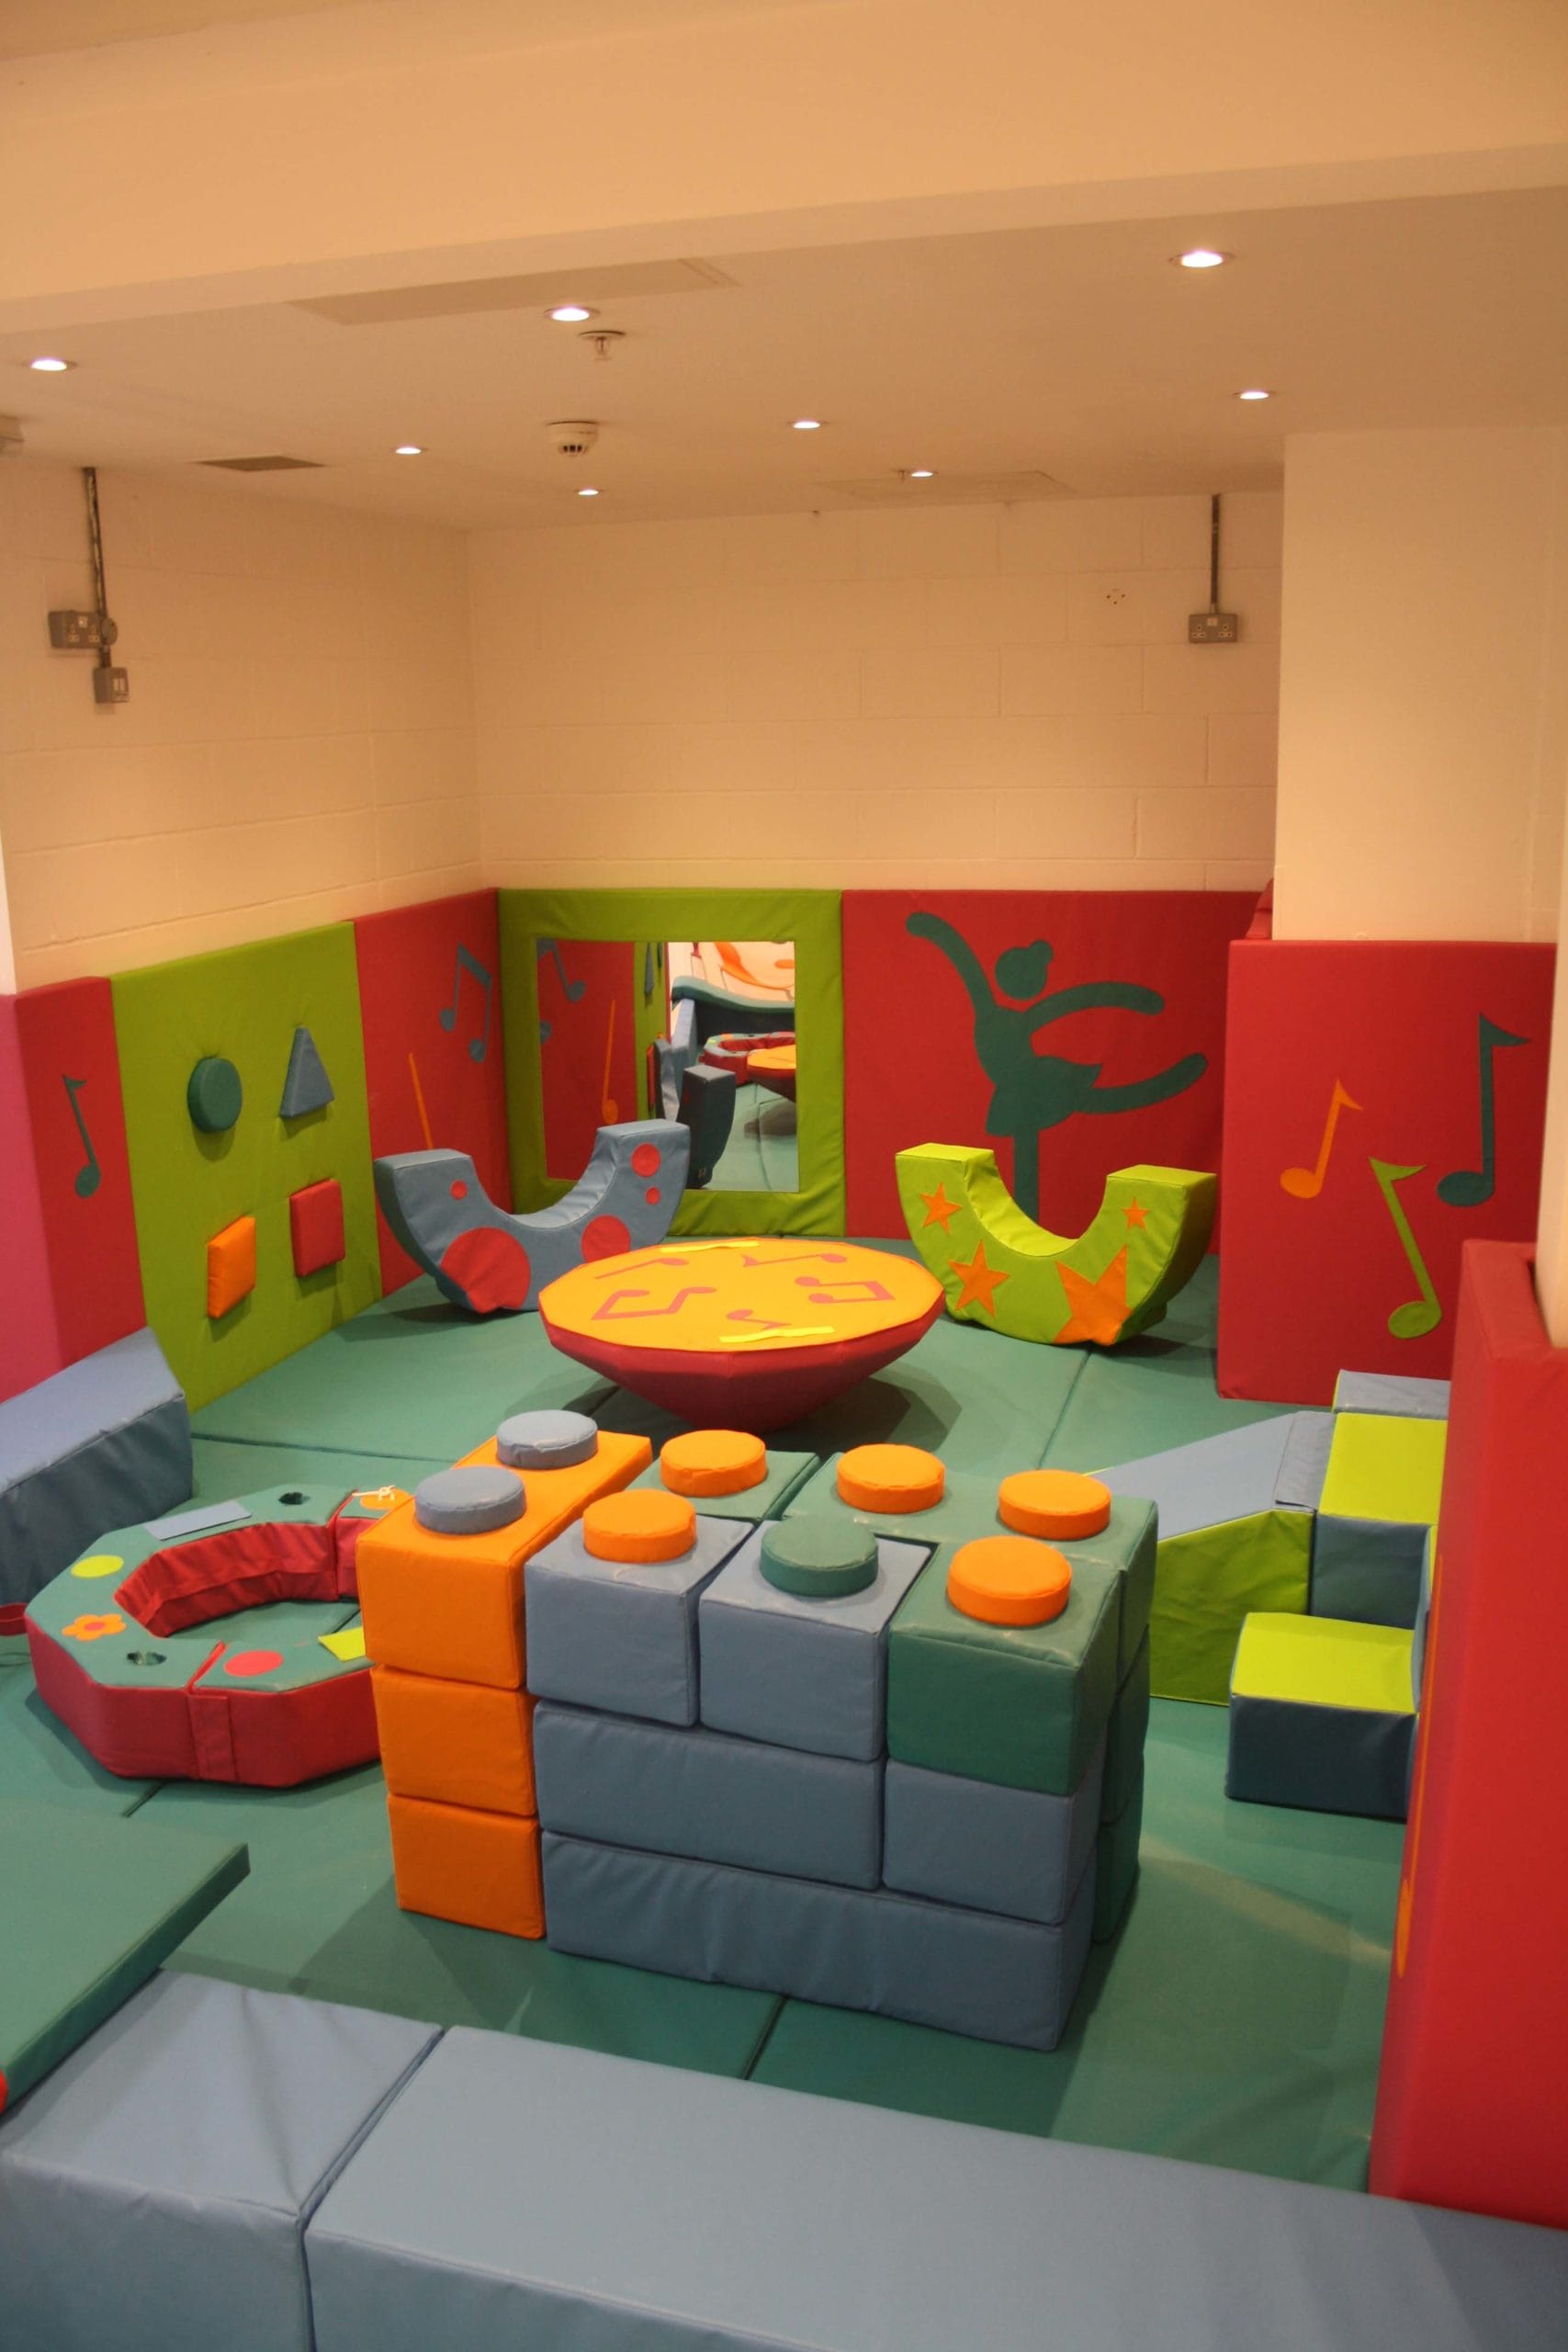 artsdepot's soft play area, playdepot. Full of foam blocks and soft walls